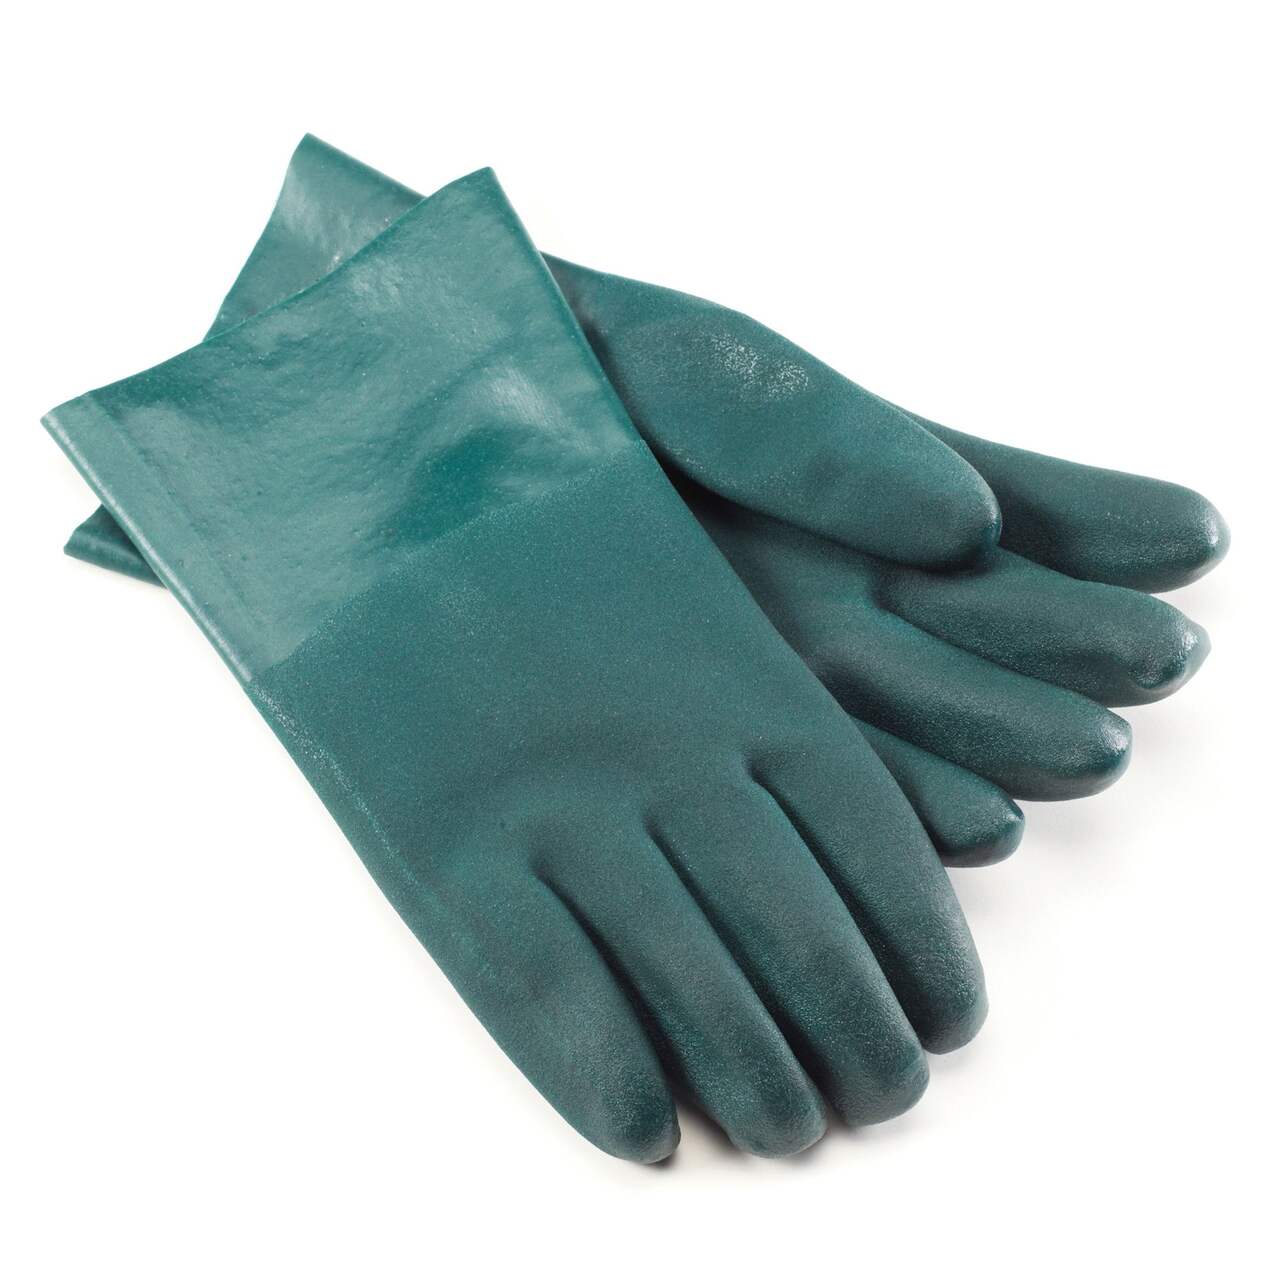 toolant Men's X-Large Work Gloves, Nitrile Coating, Blue, 12 Pairs